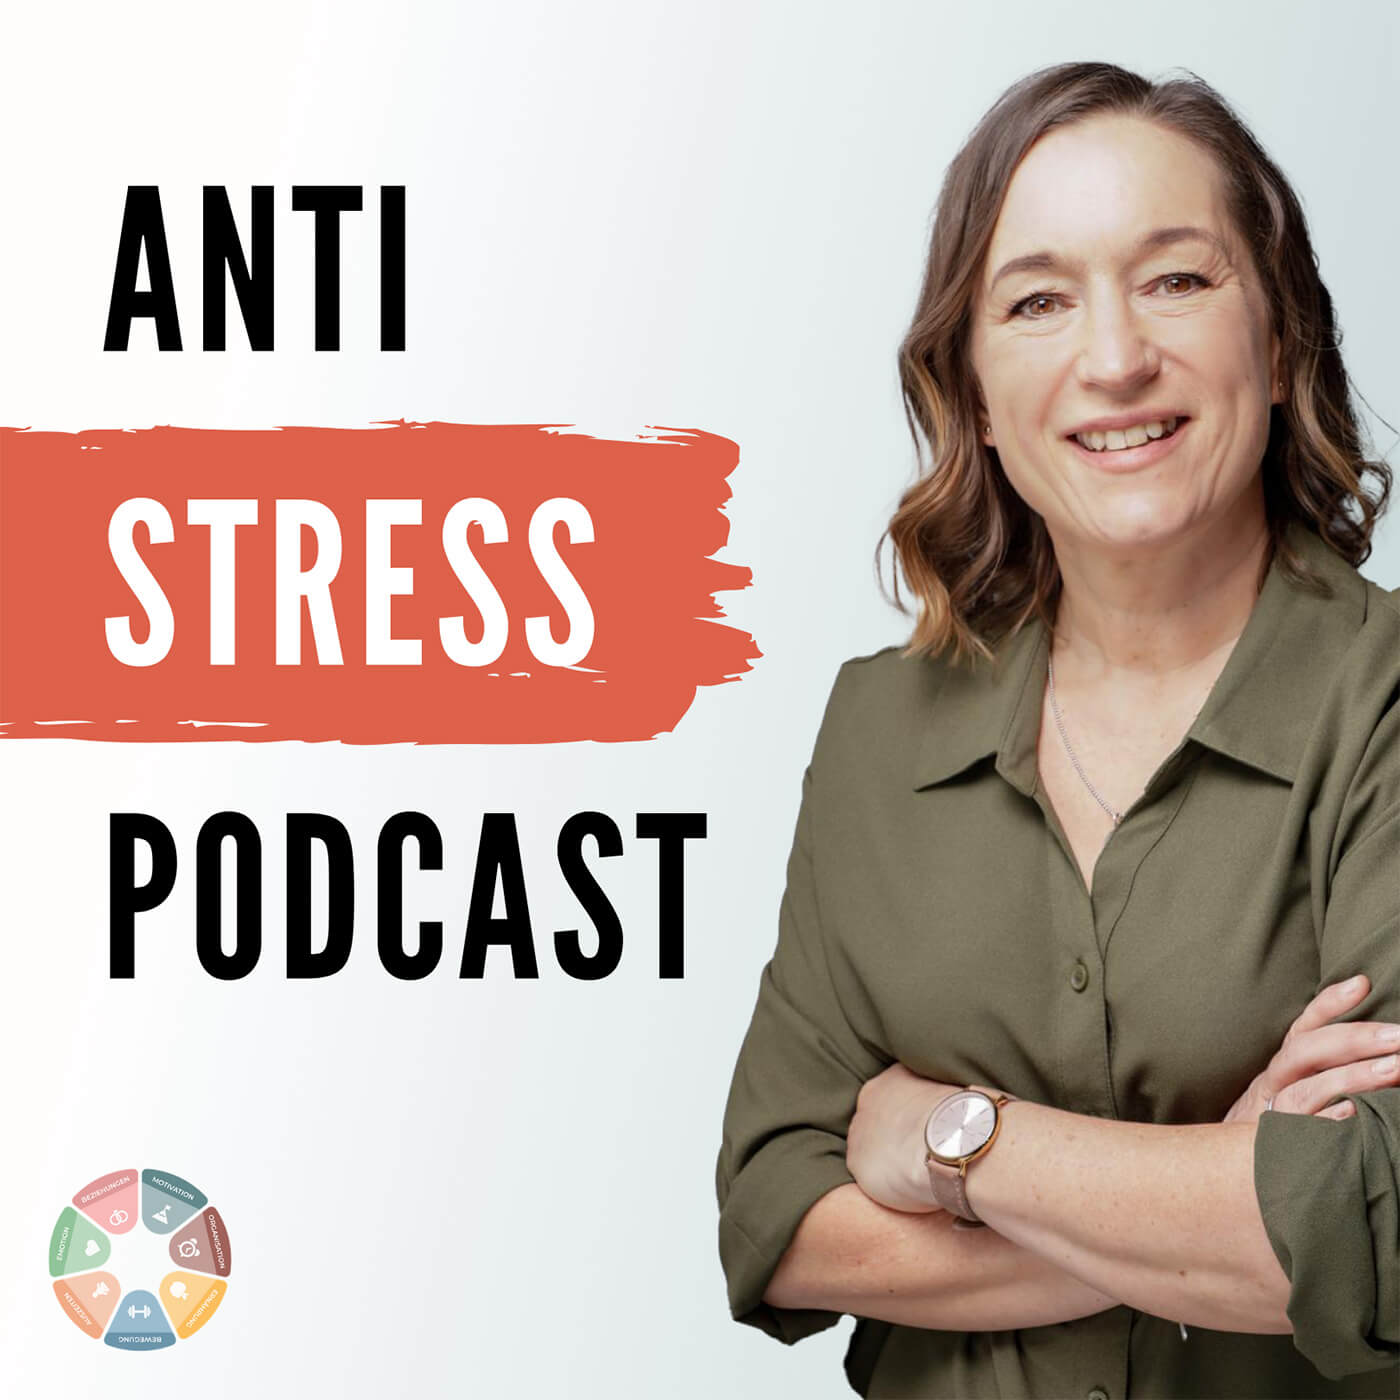 Anti Stress Podcast